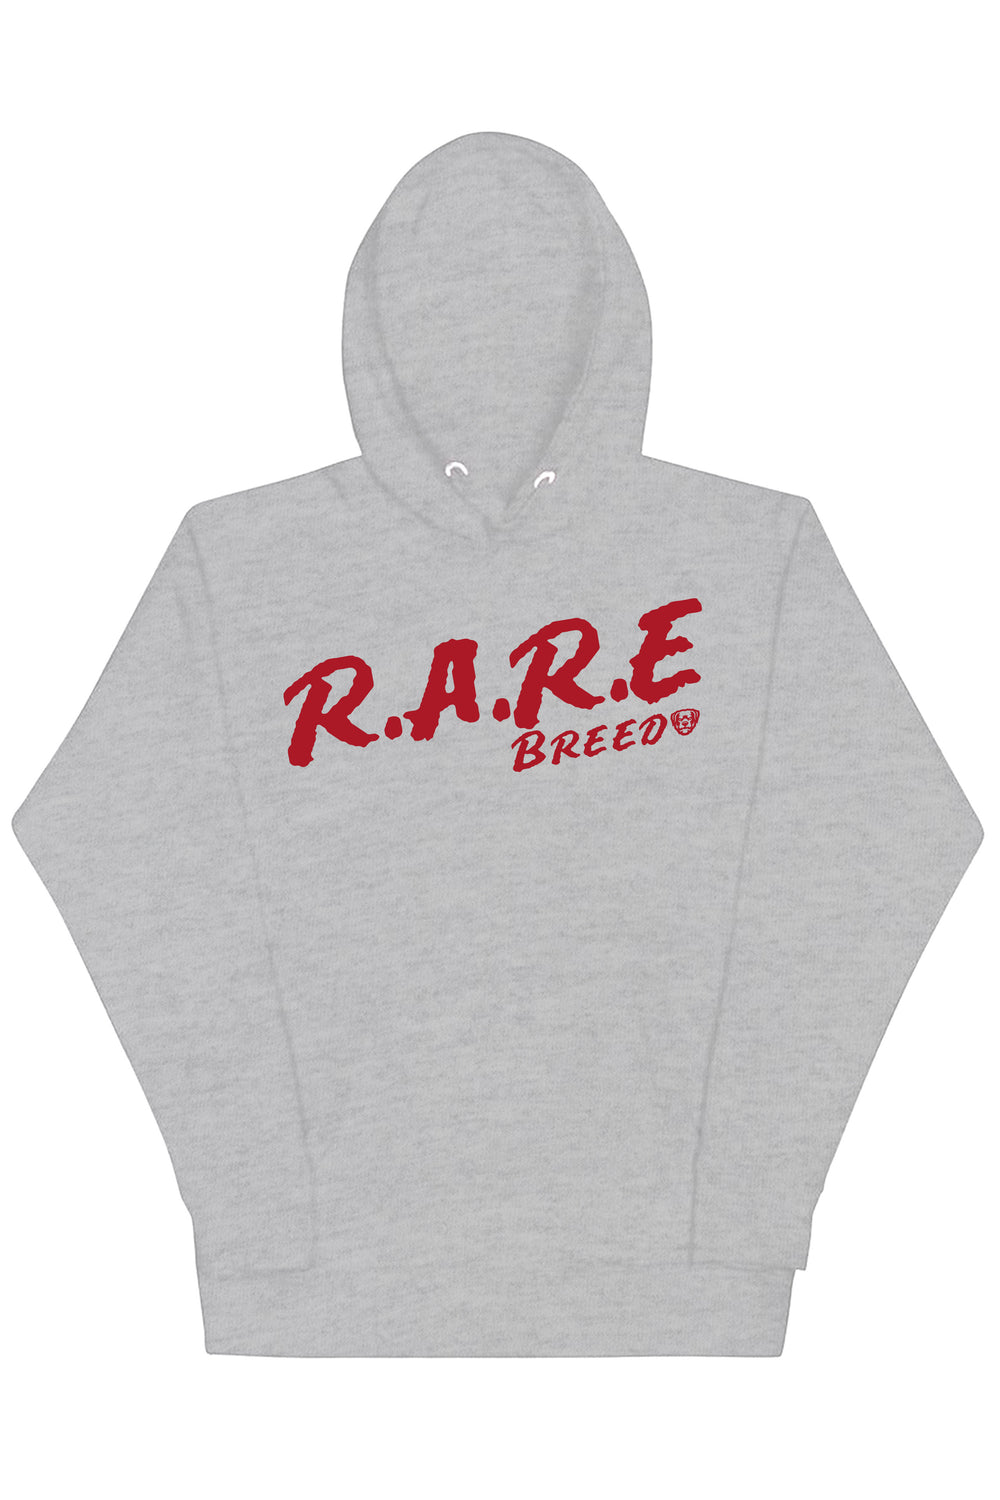 Rare Breed Hoodie (Red Logo) - Zamage